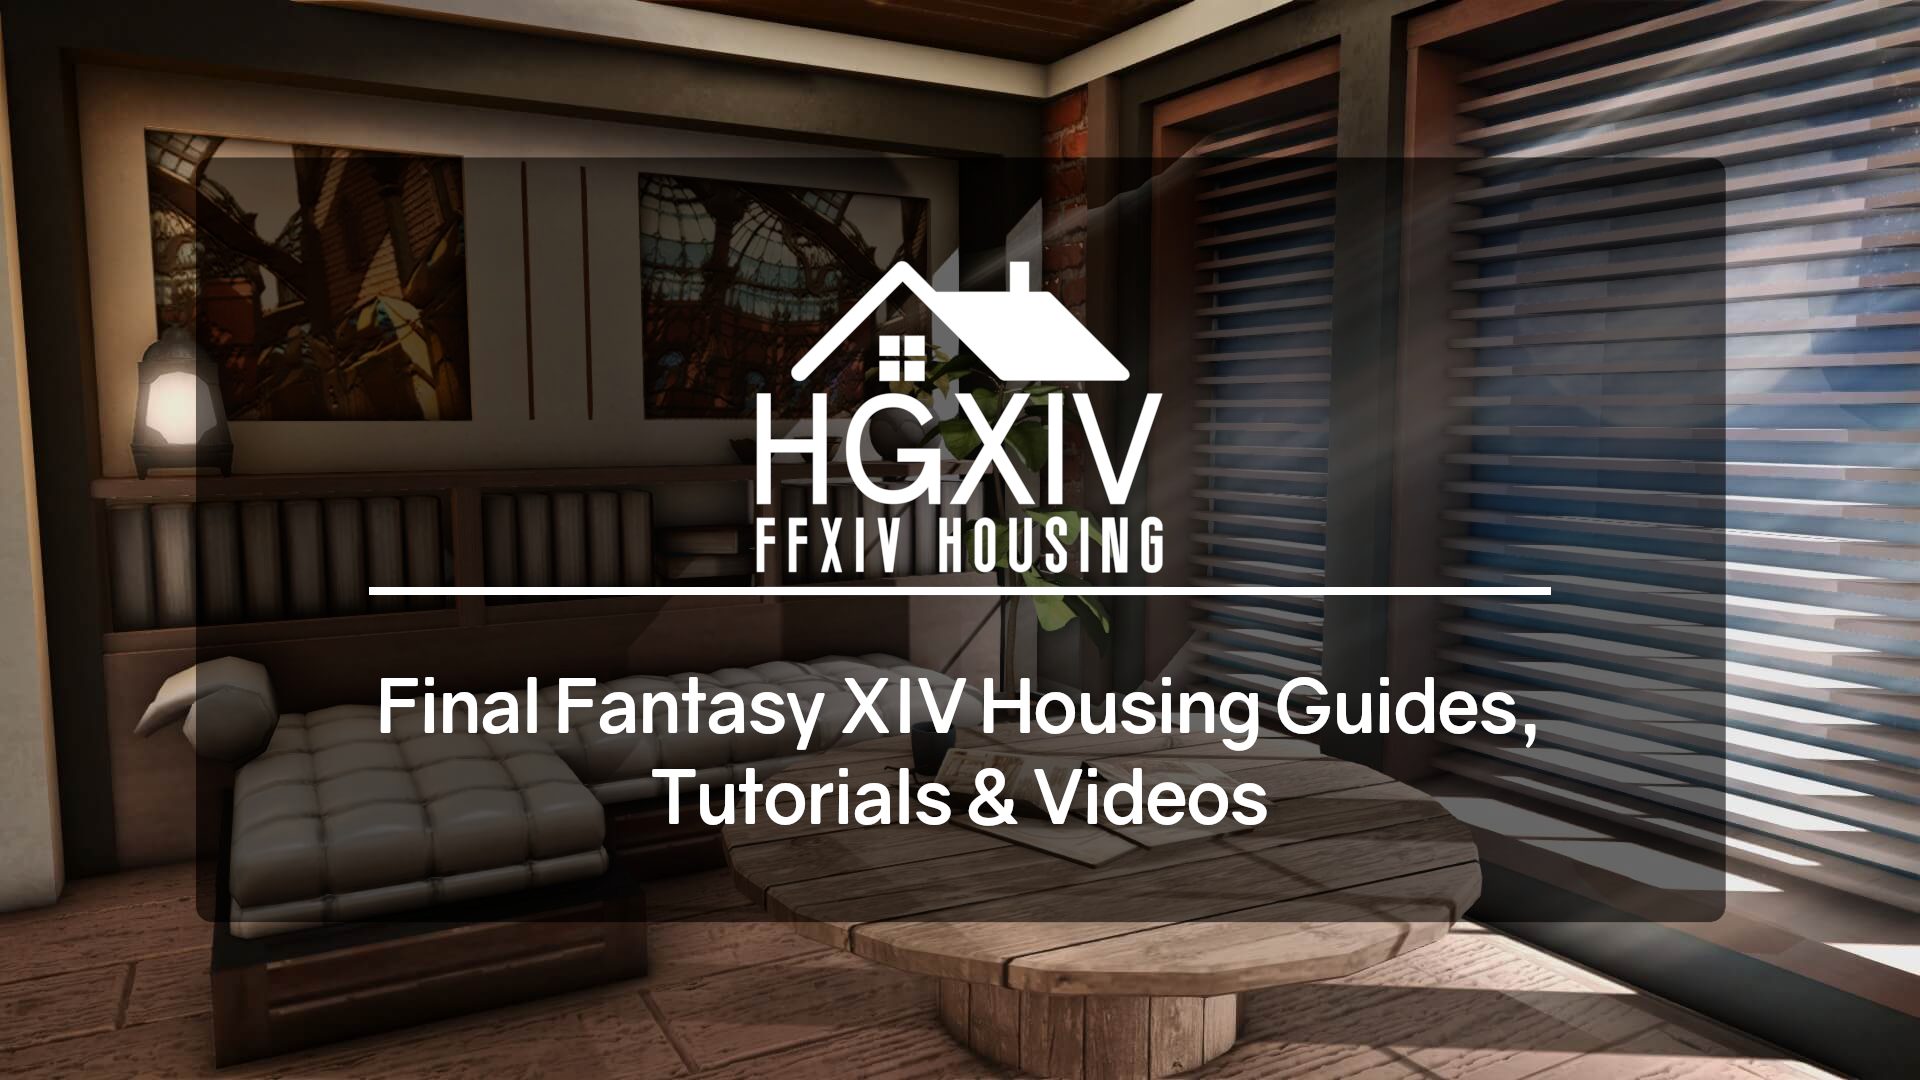 HGXIV - Final Fantasy XIV Housing Guides, Tutorials & Videos